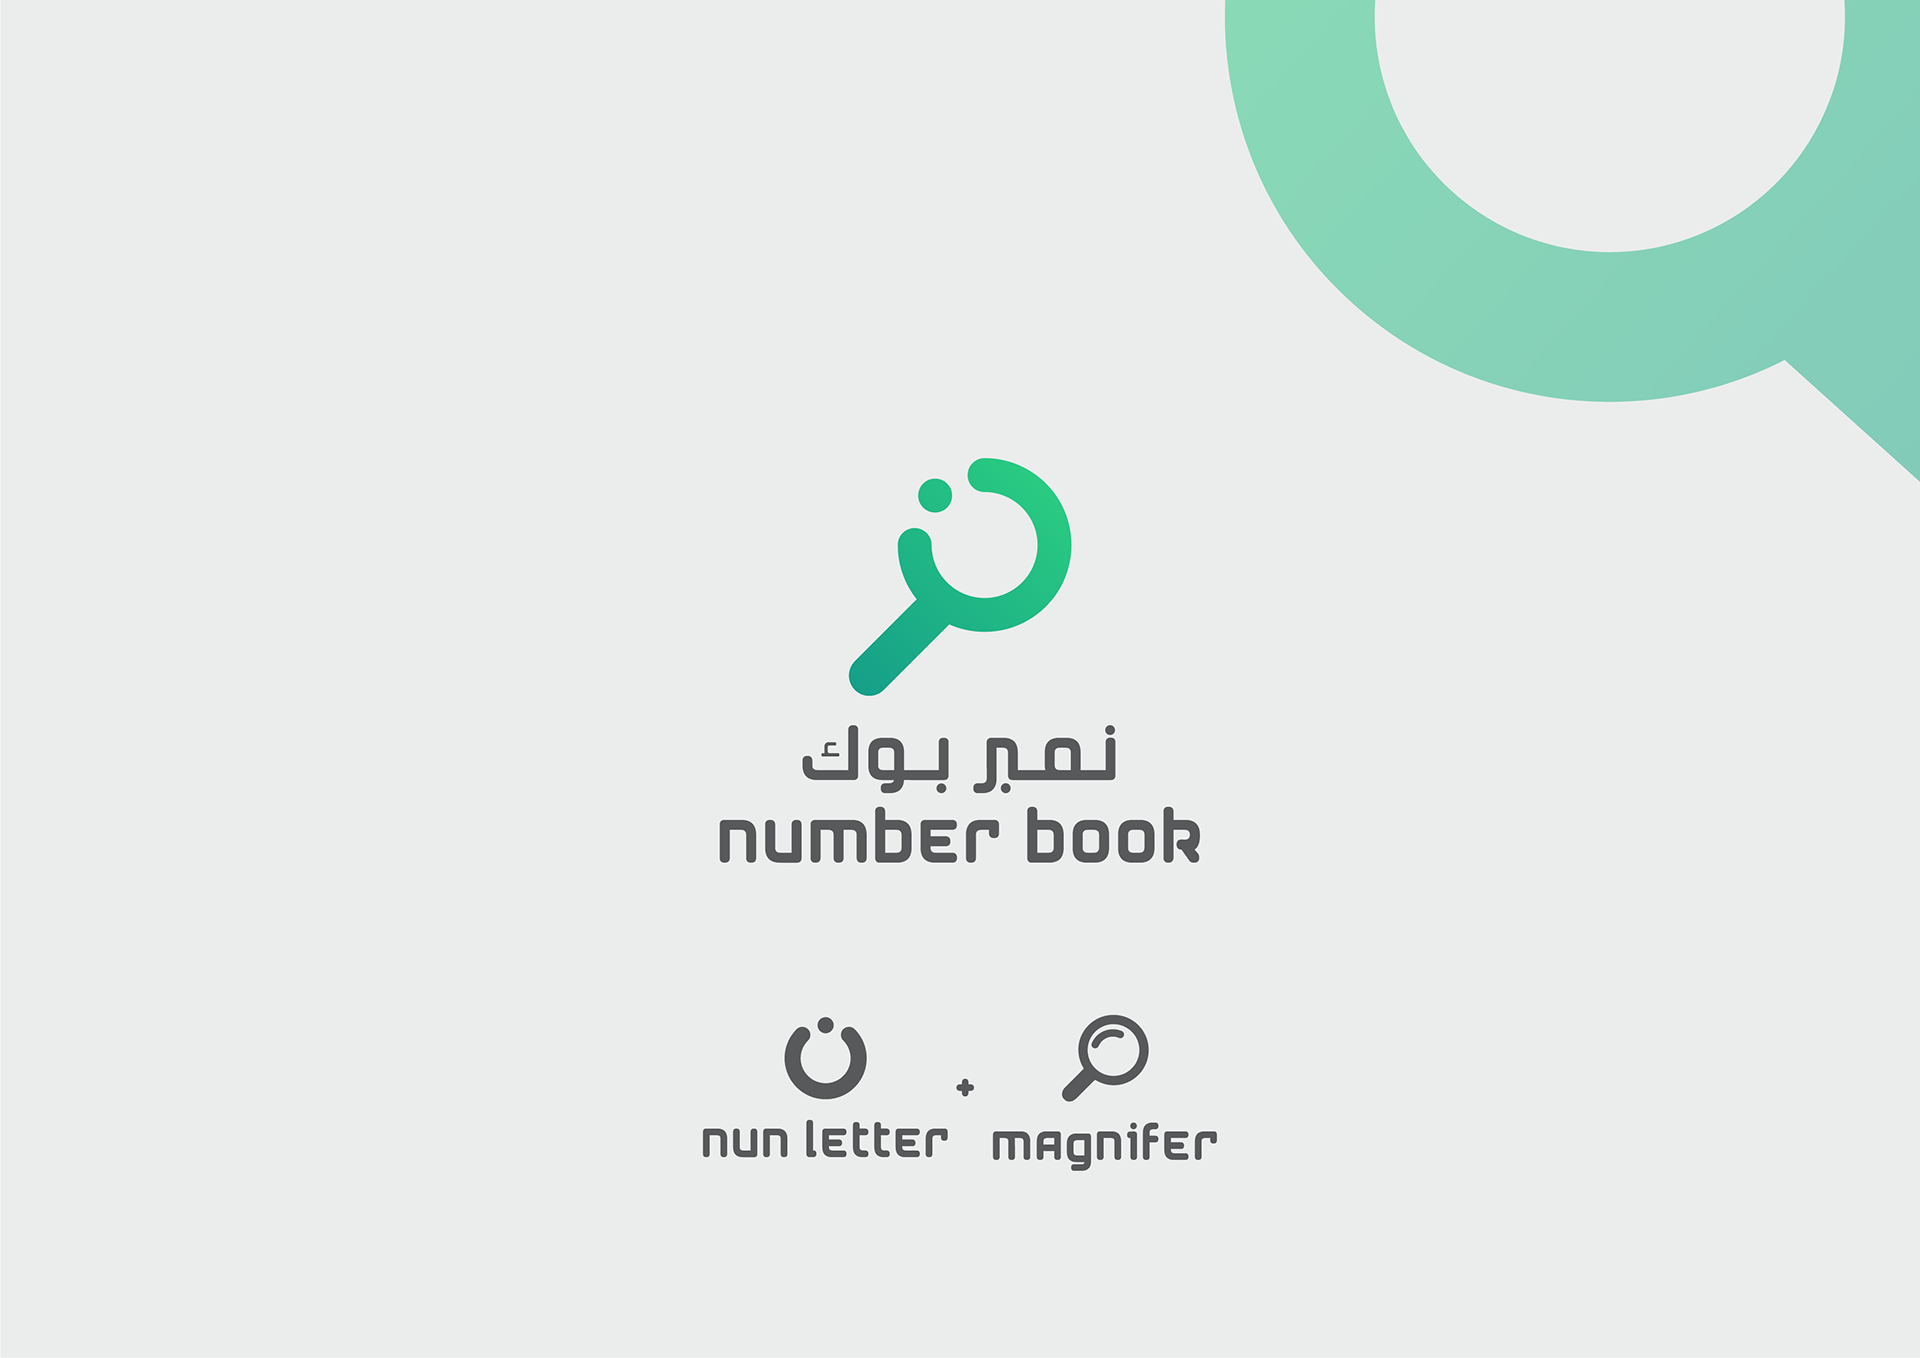 Number book ksa